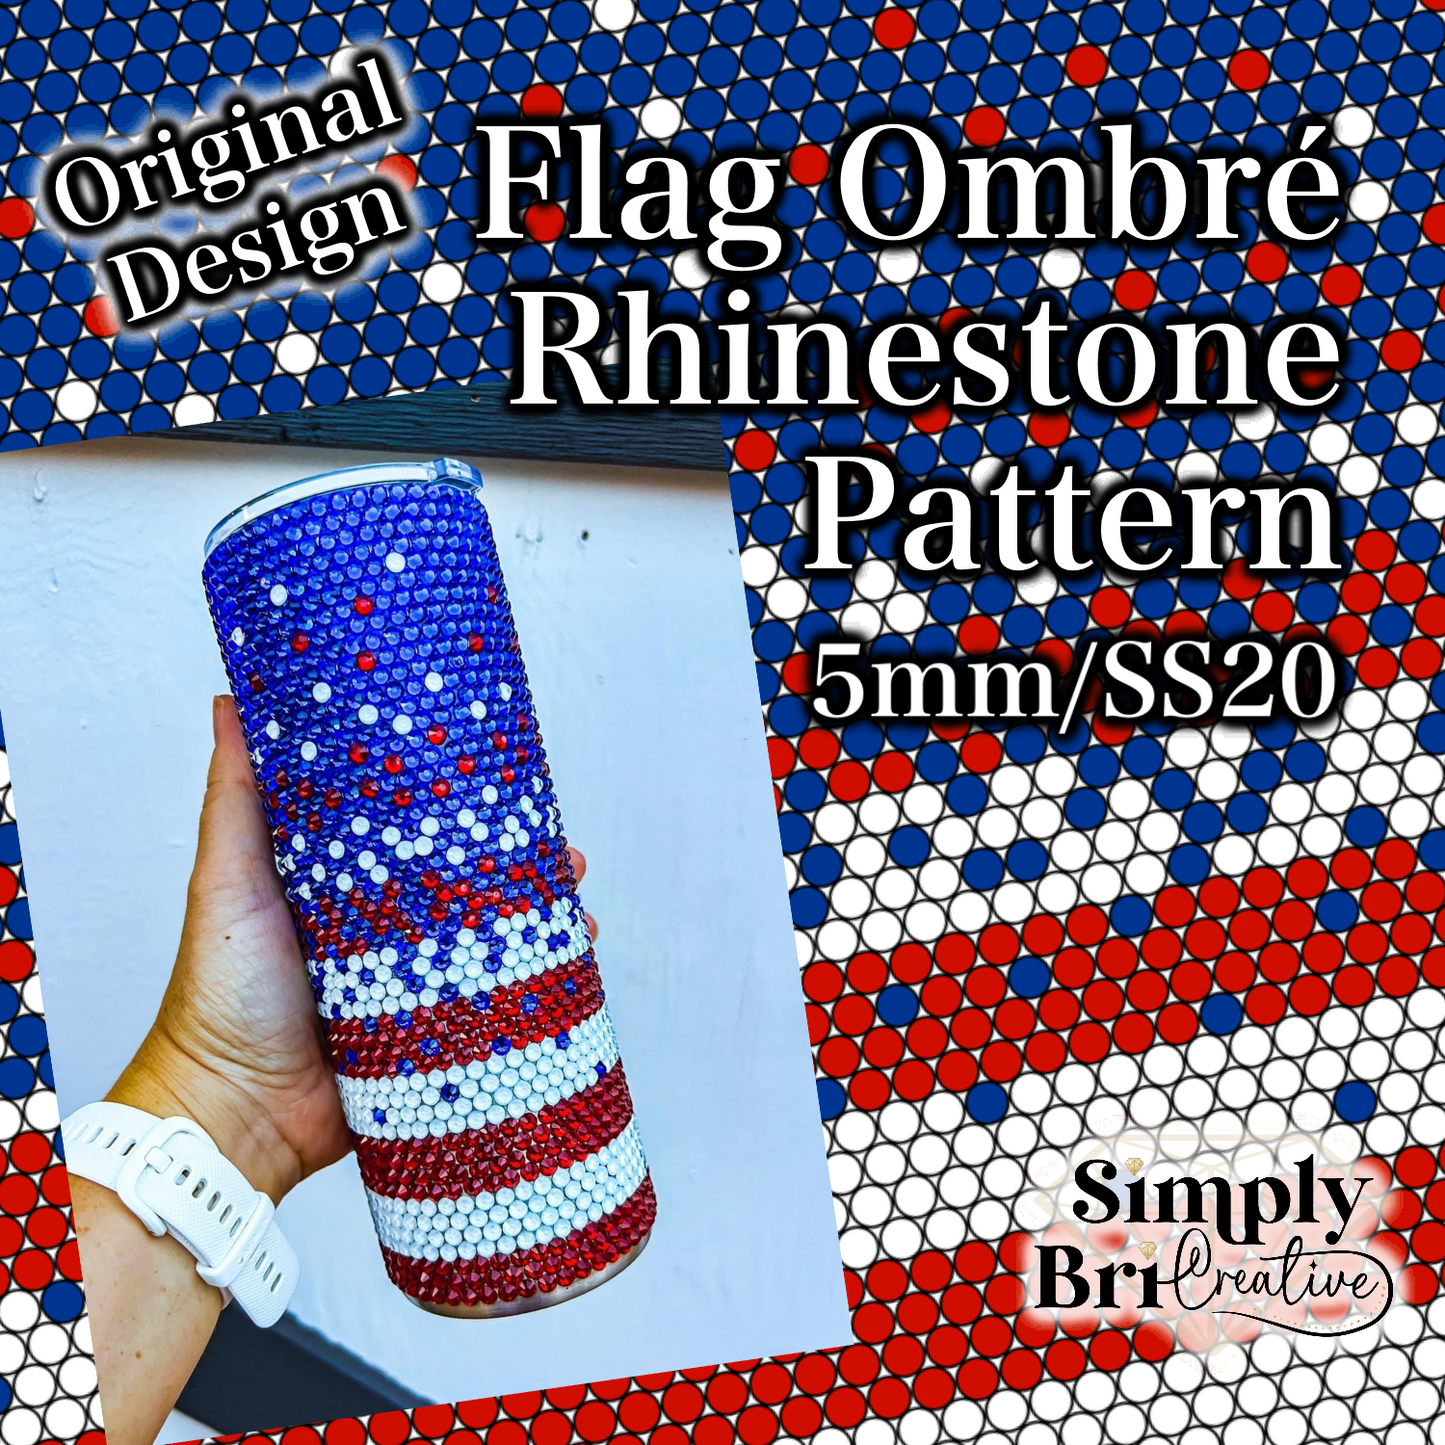 Flag Ombre Rhinestone Pattern (5mm/SS20)